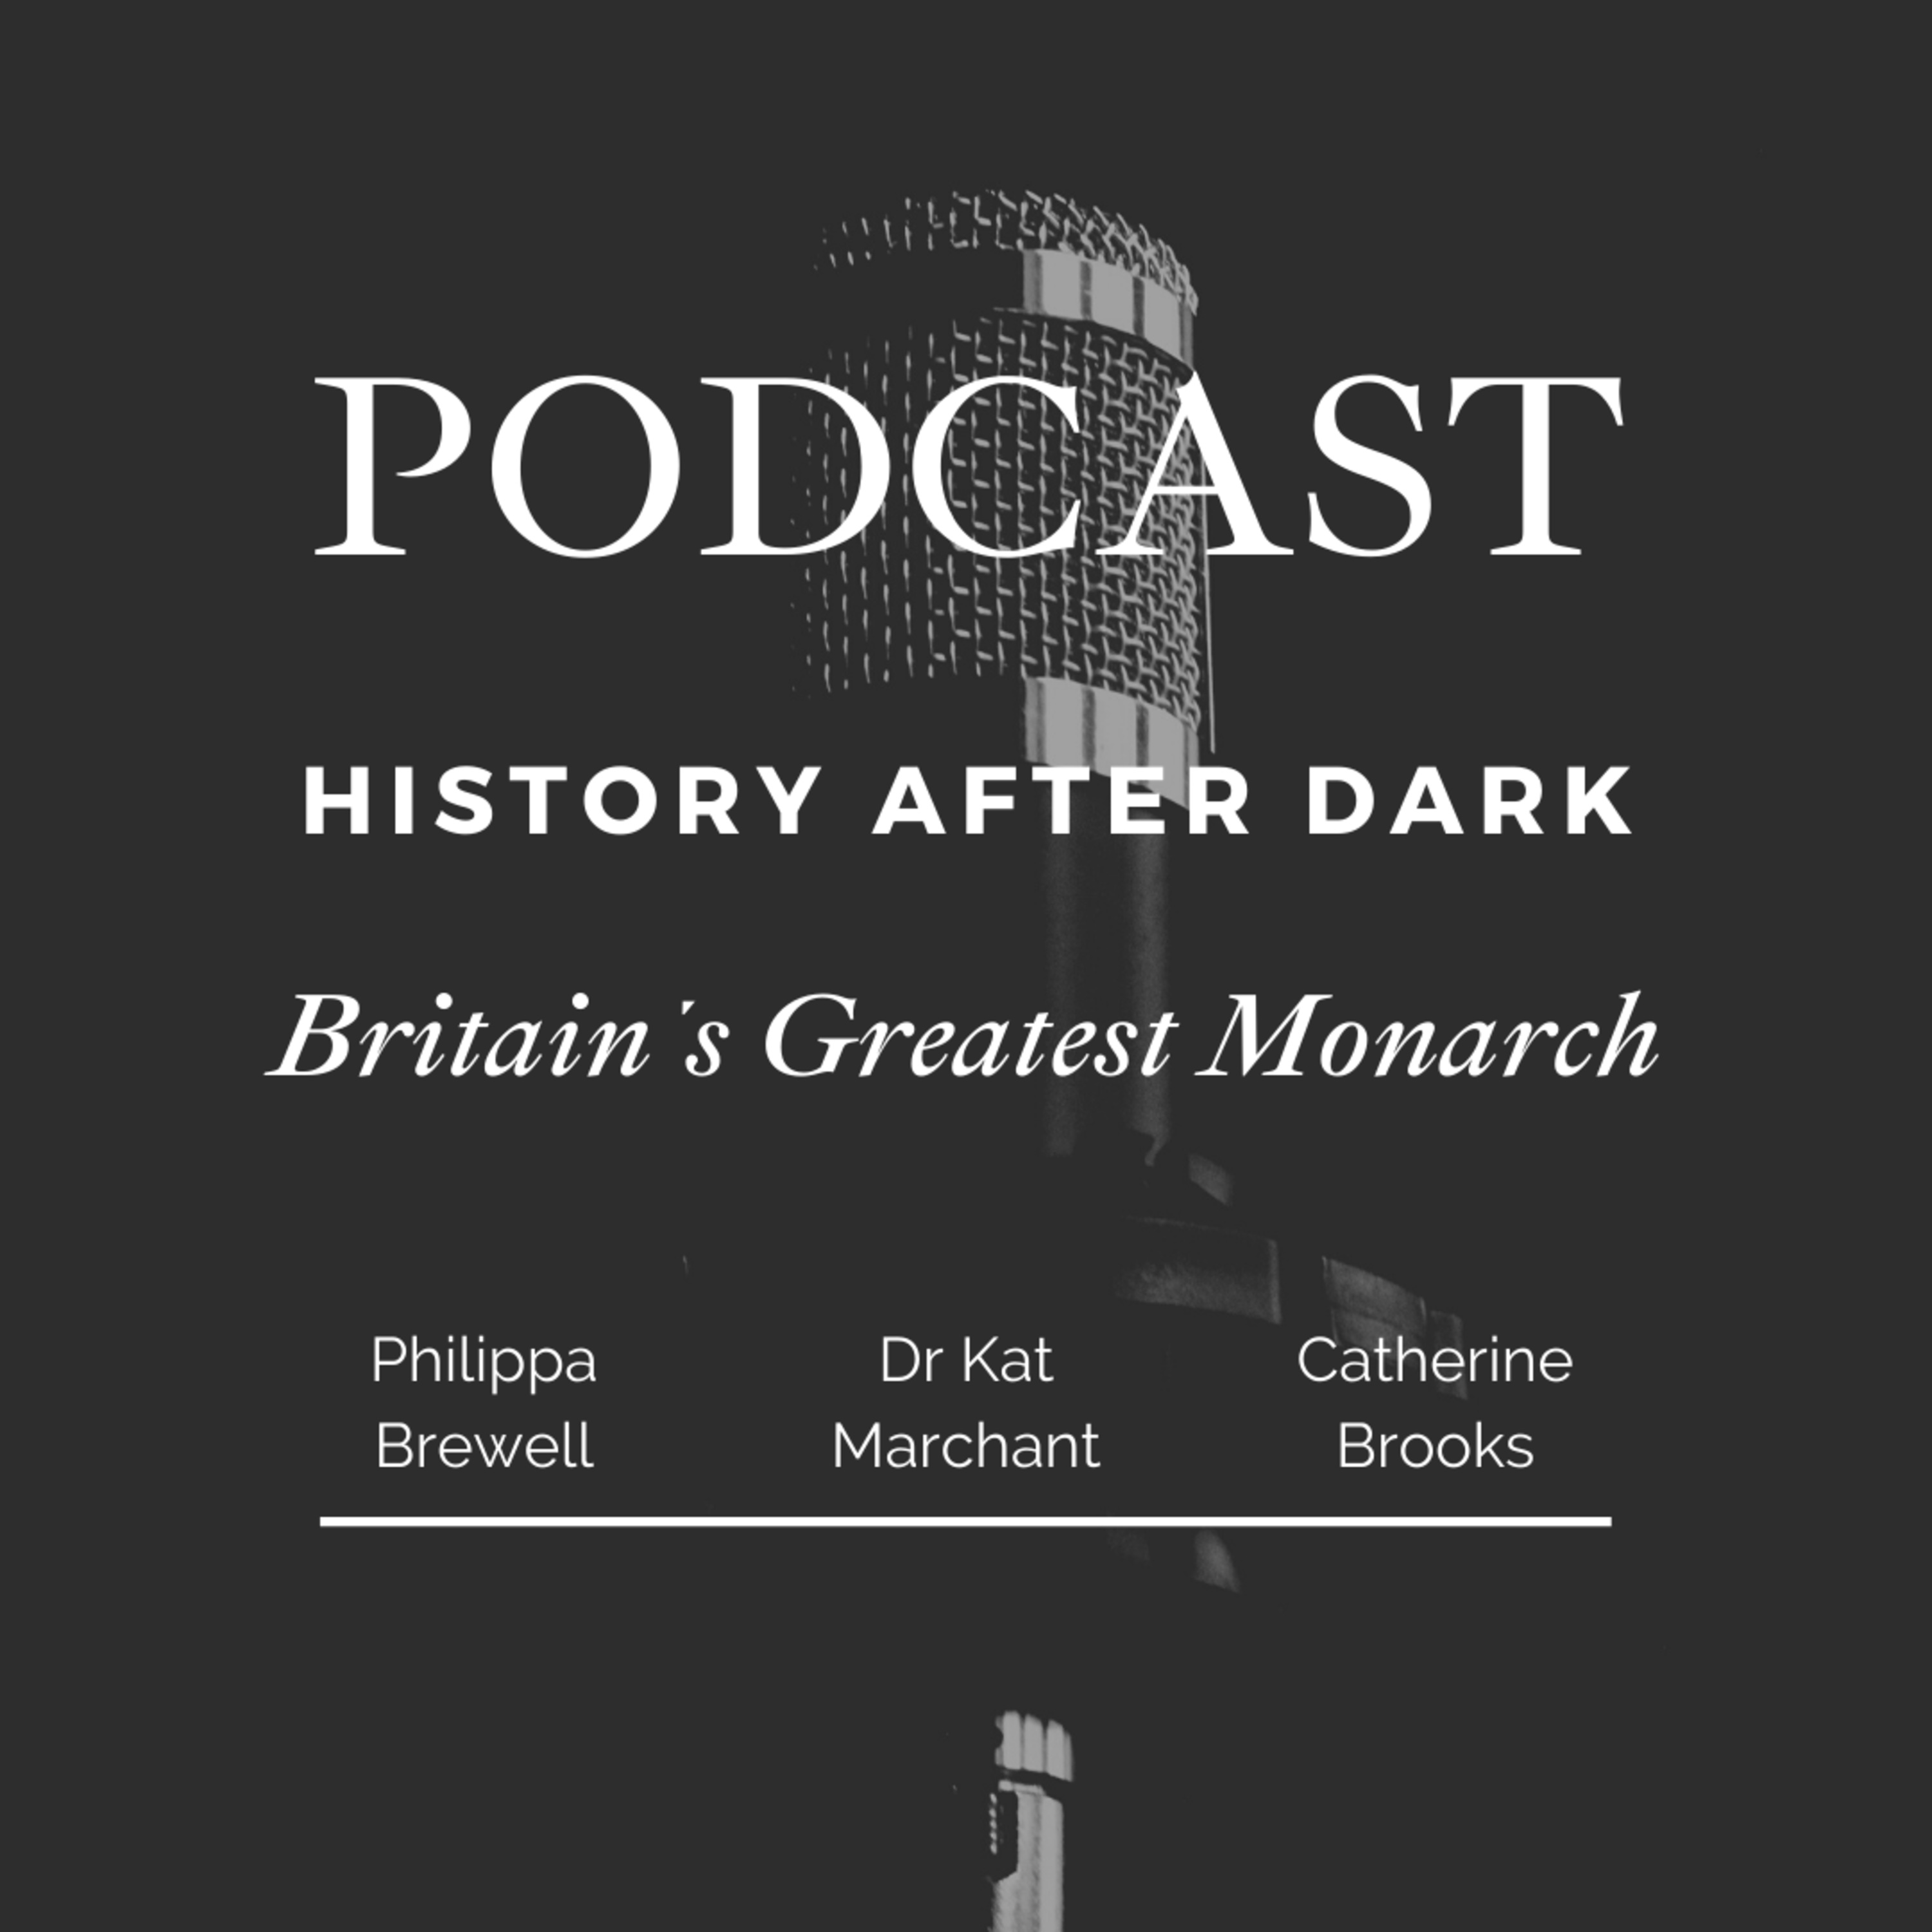 Who was Britain’s Greatest Monarch?